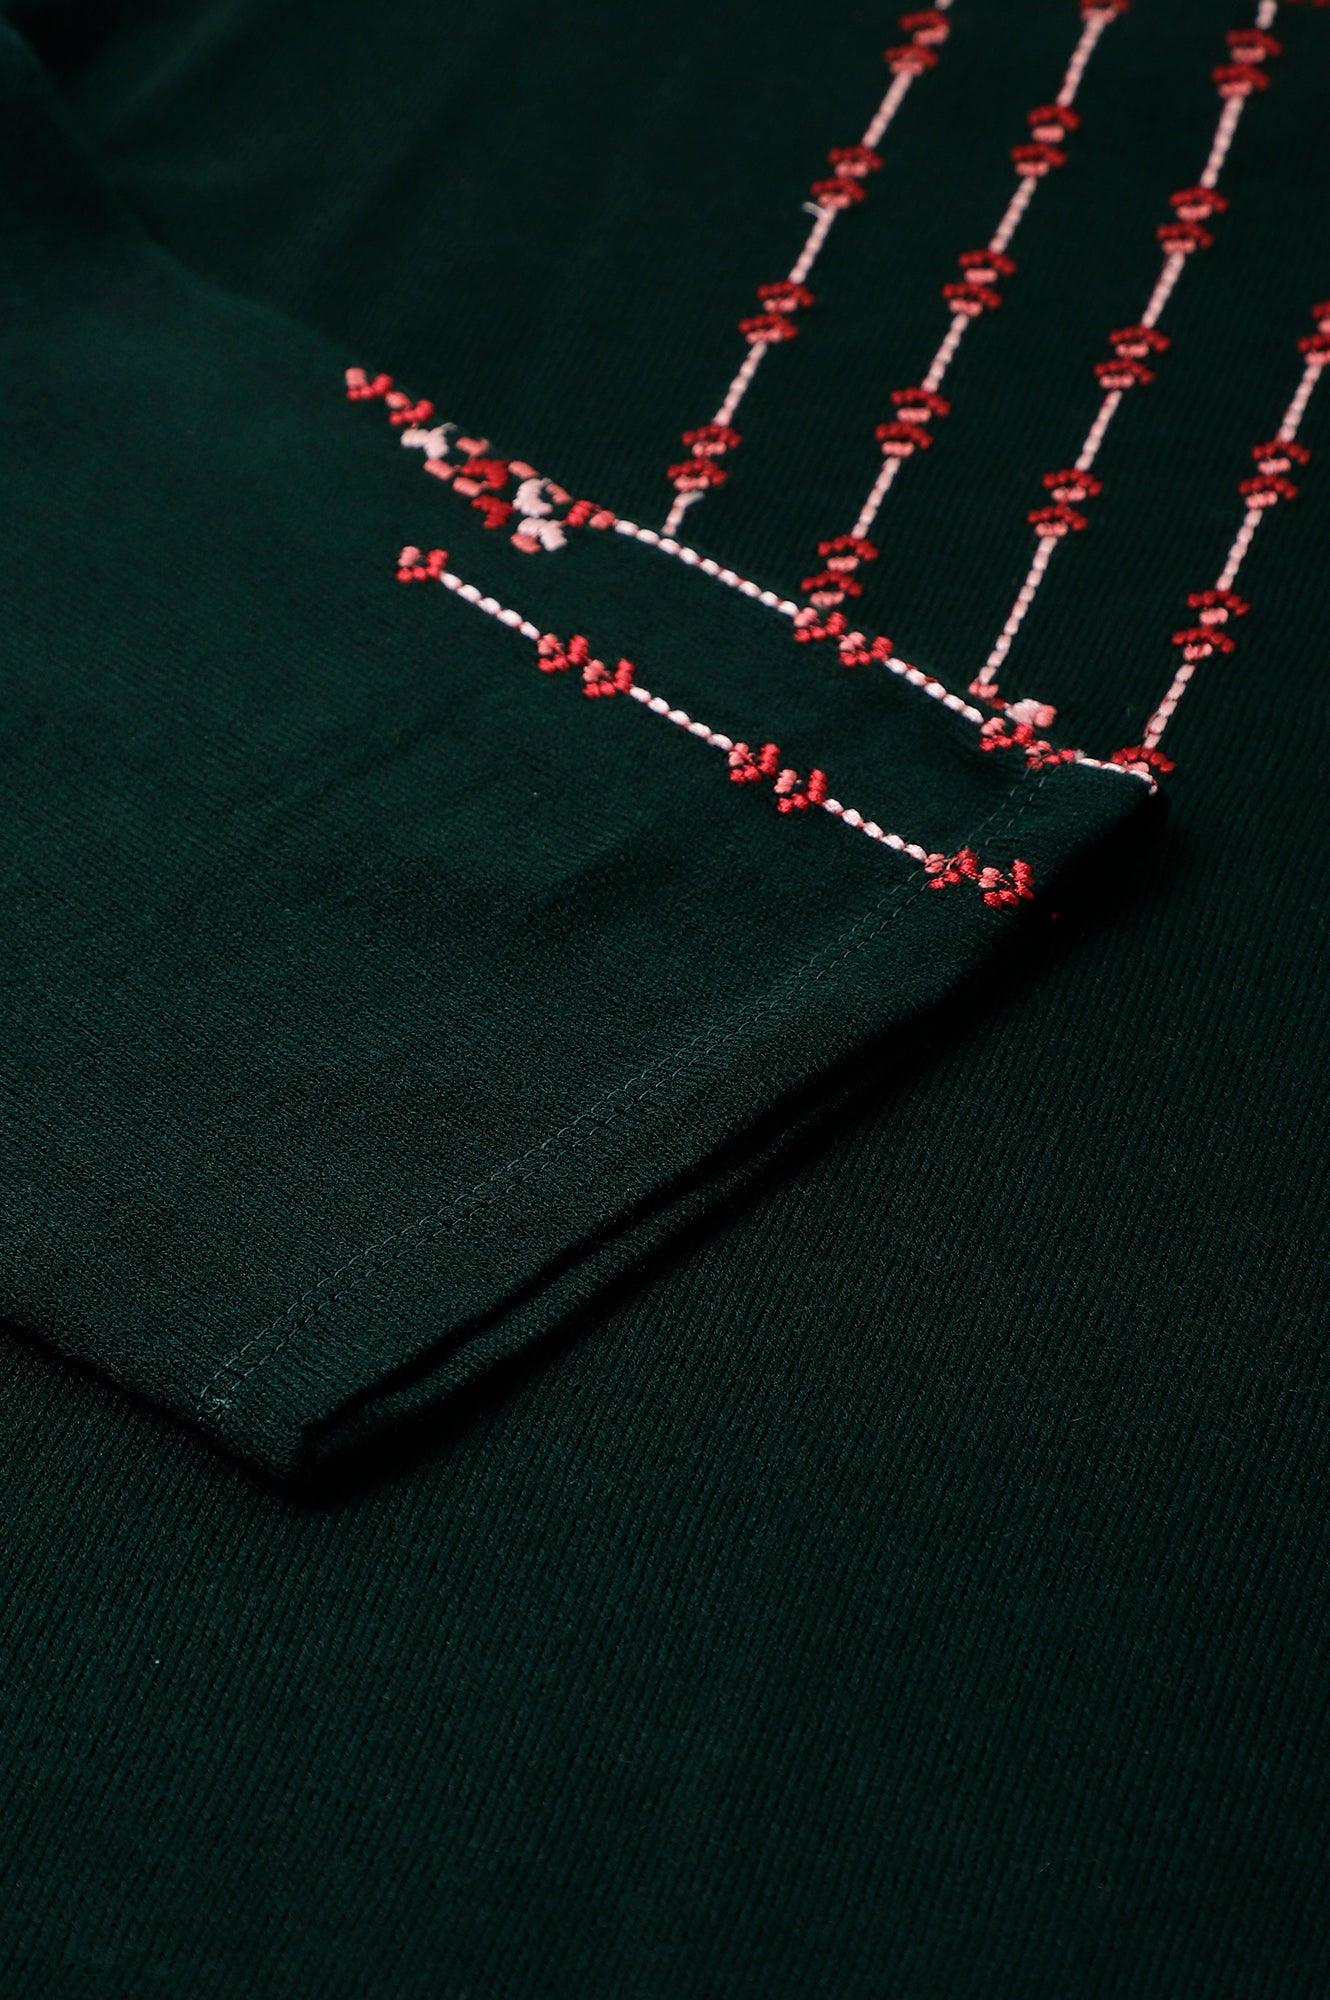 Dark Green Embroidered Plus Size Winter kurta - wforwoman